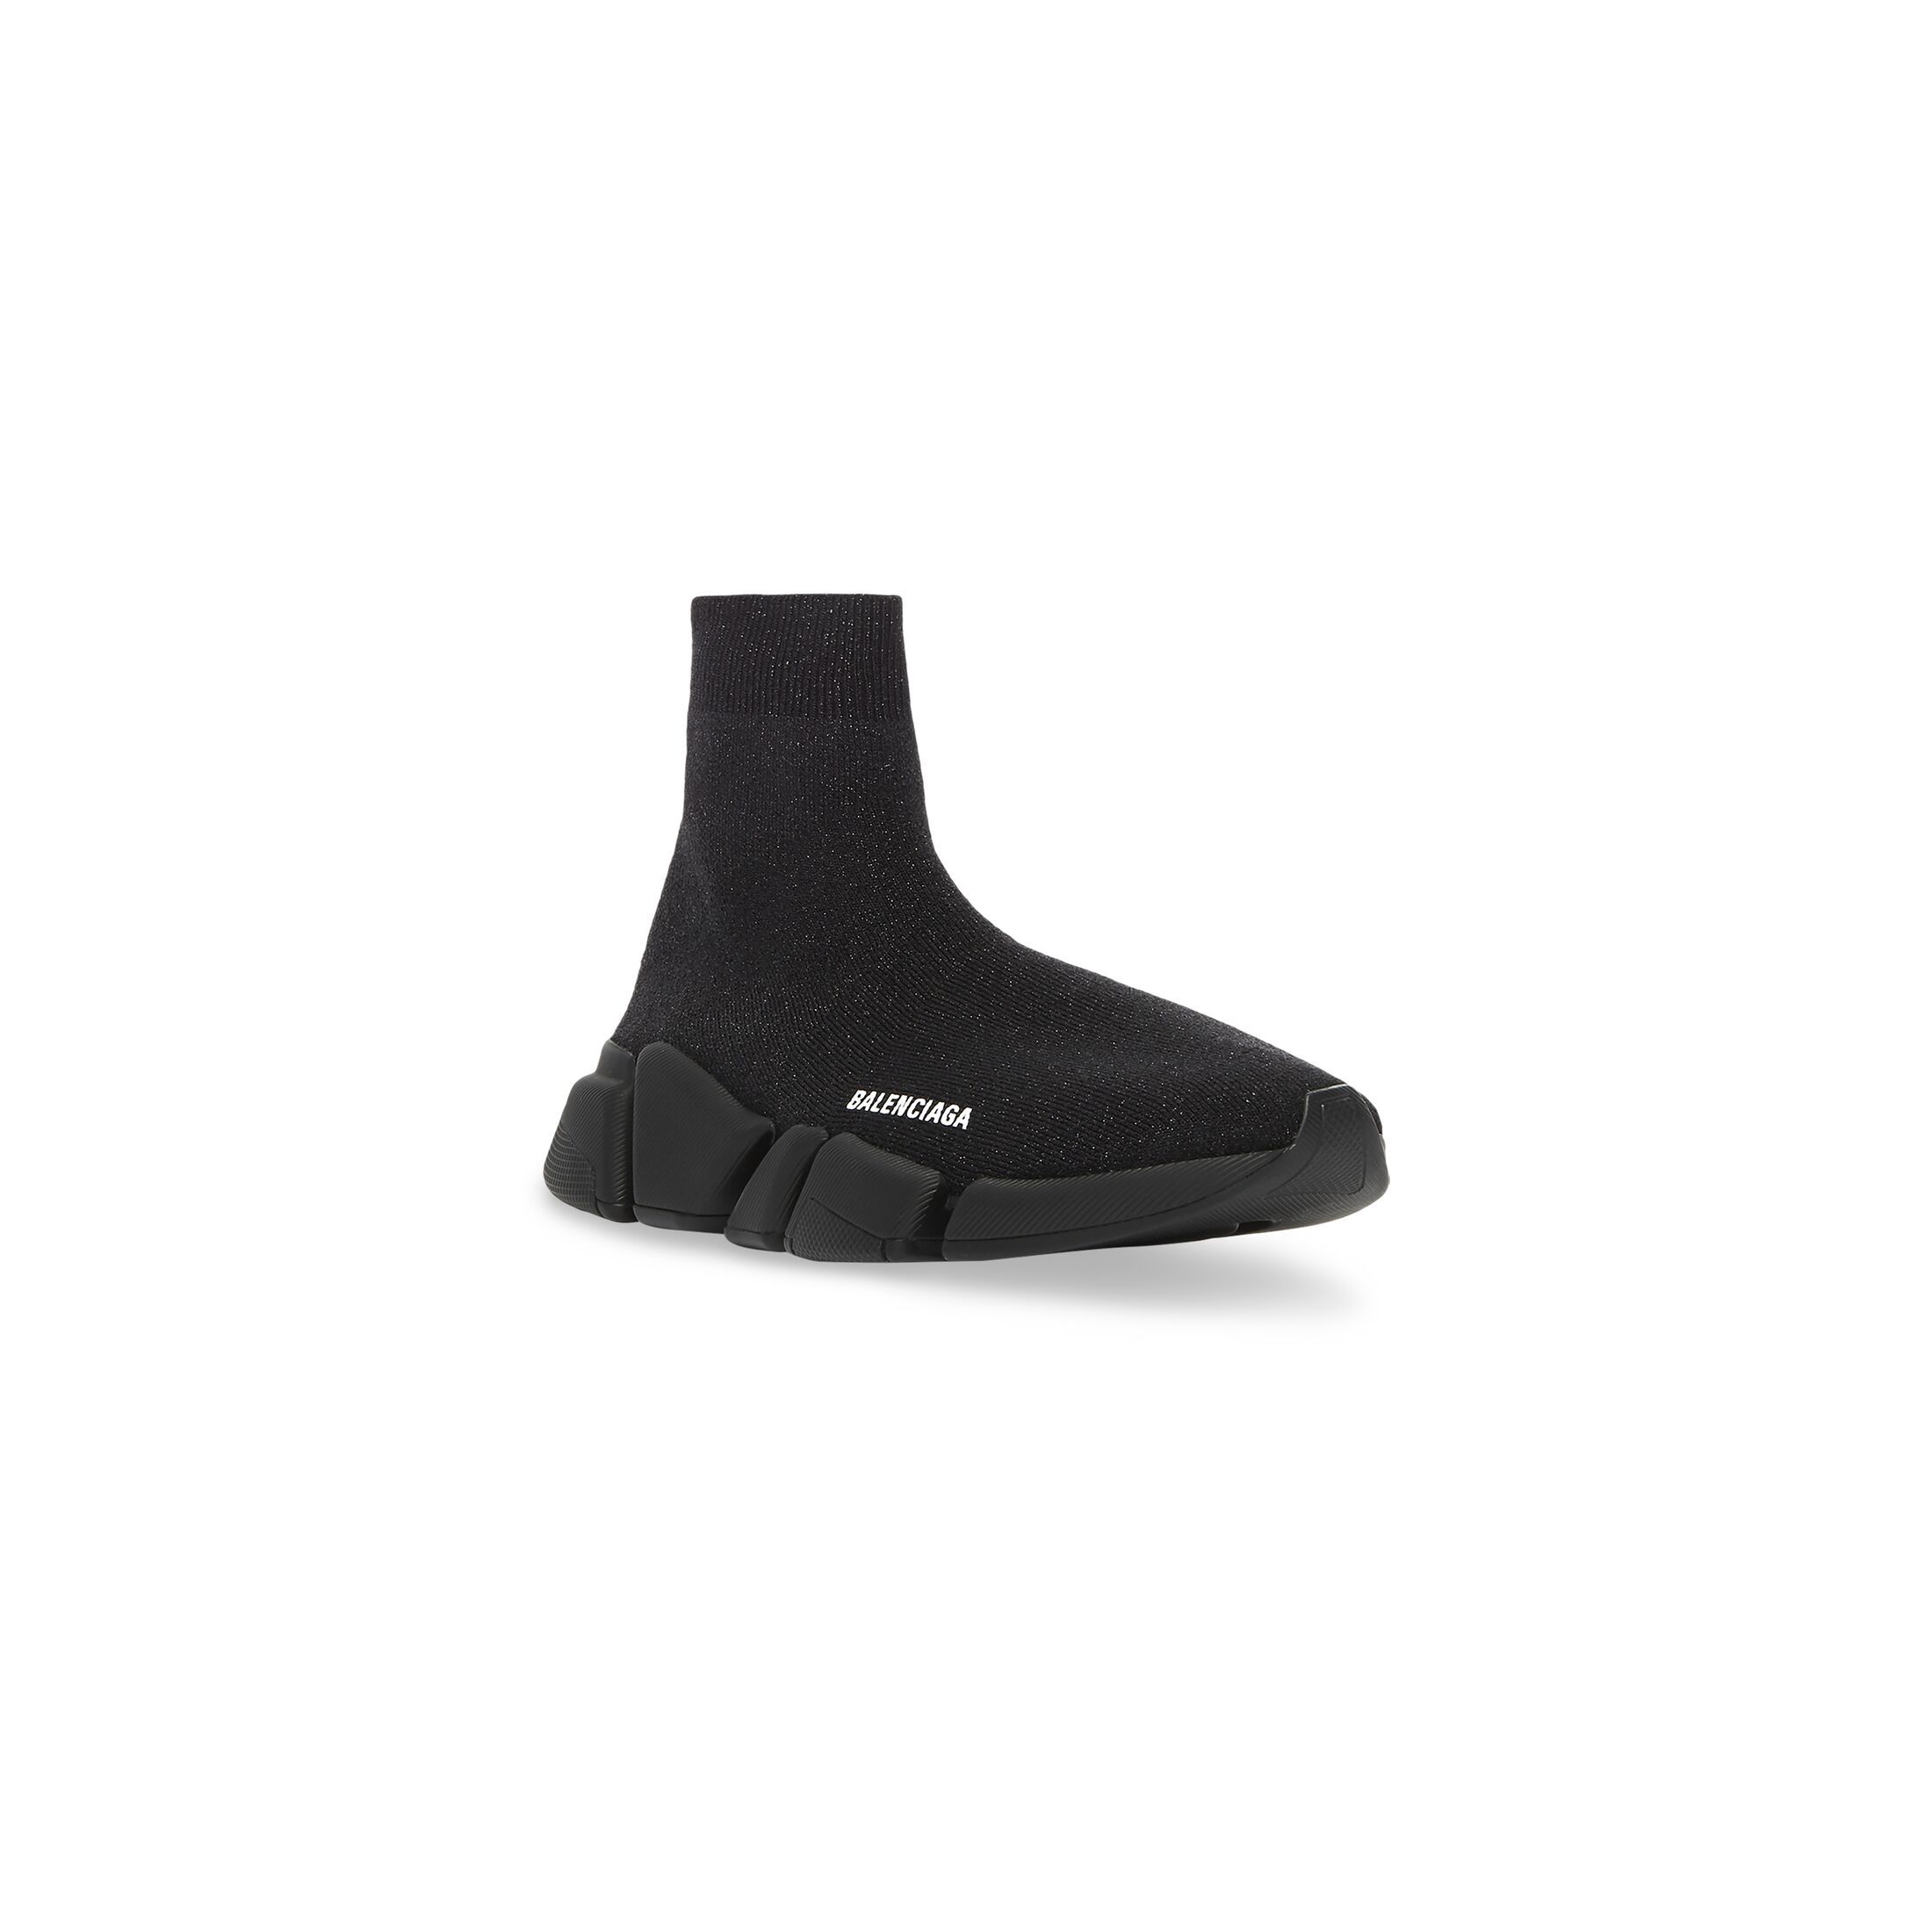 Speed 2.0 Sneaker in black shiny knit, black sole unit | Balenciaga